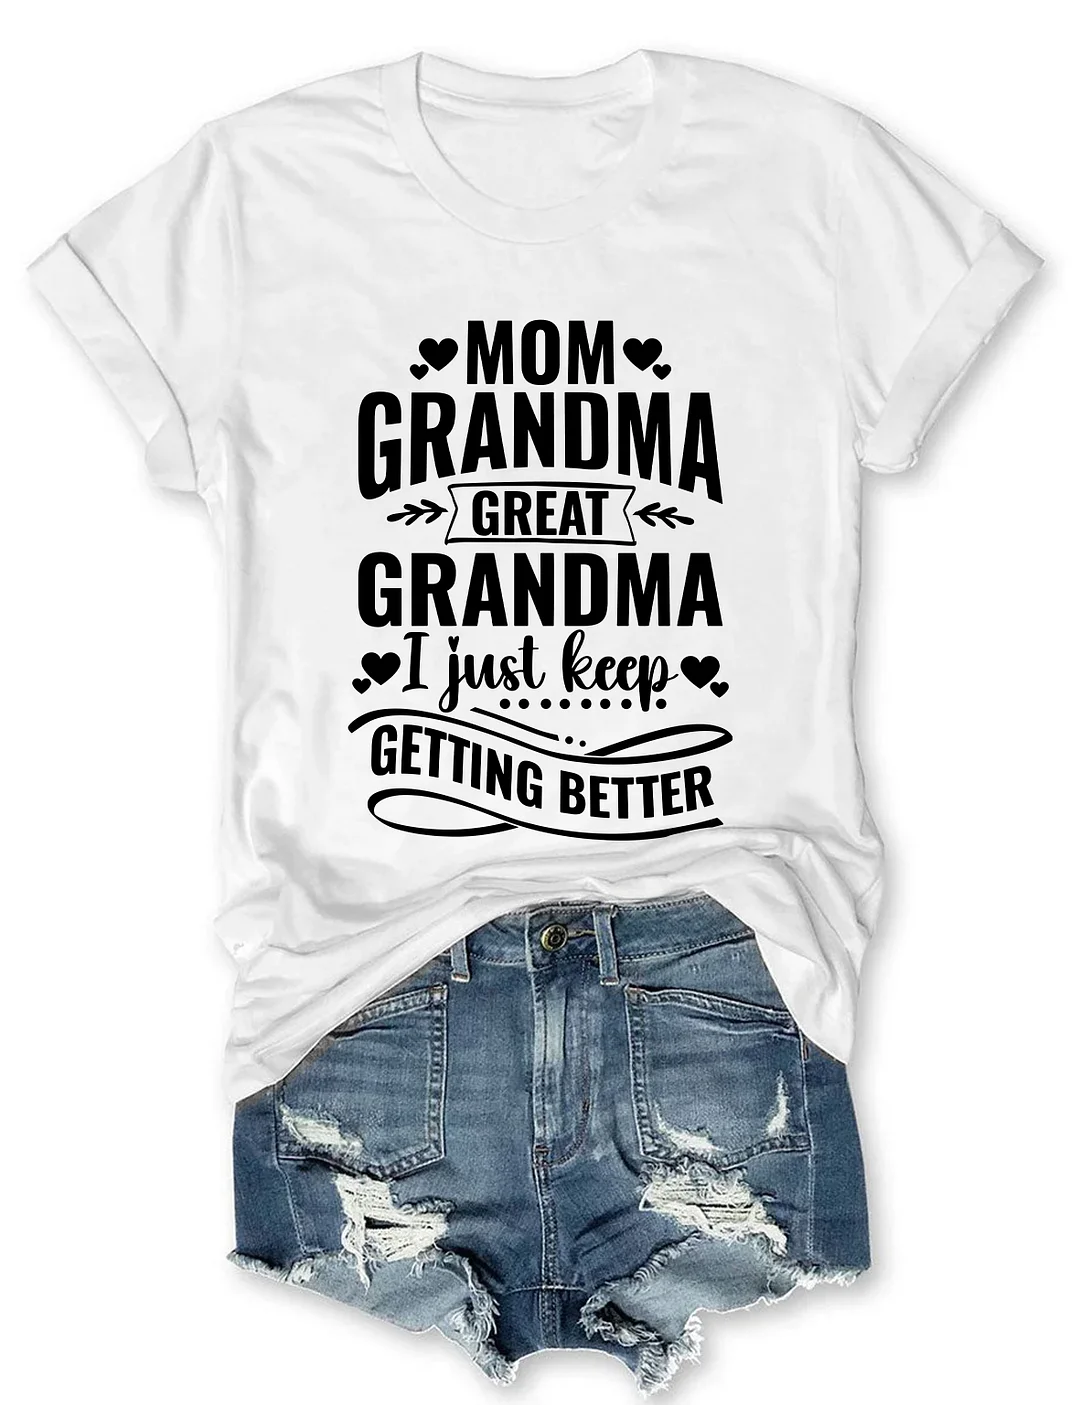 Great Grandma T-shirt